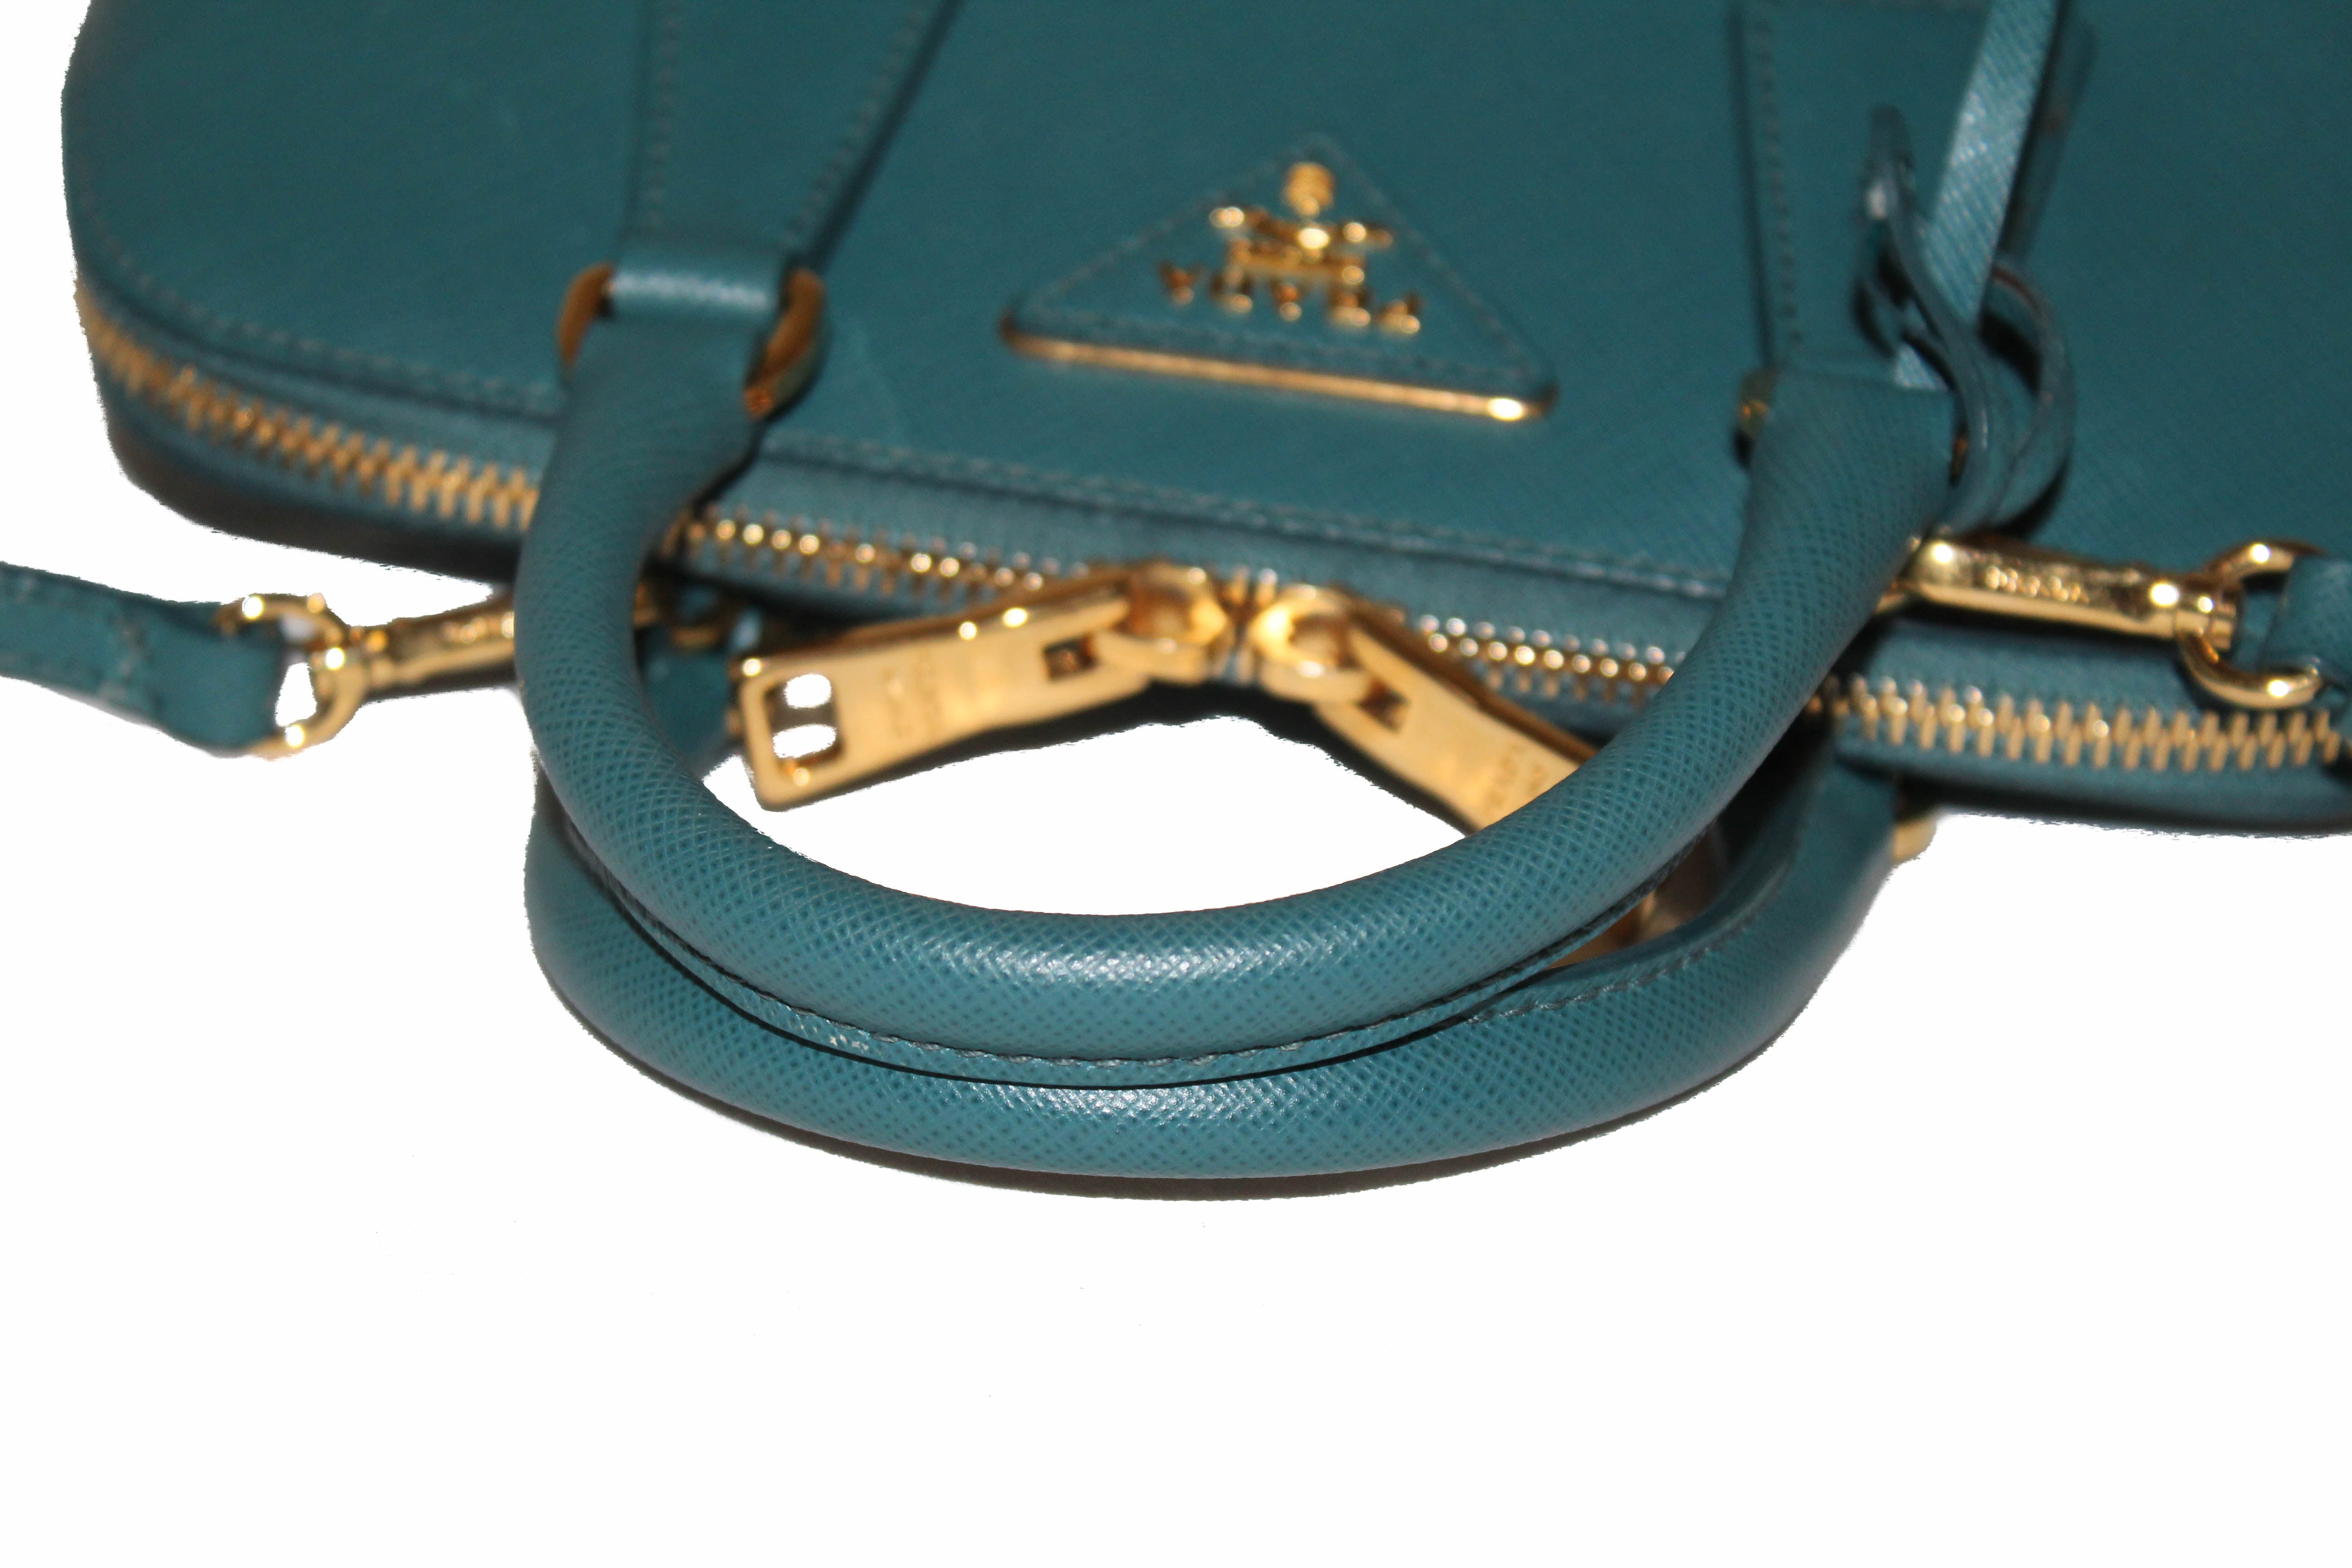 Prada Saffiano Alma Mini Lago Blue - Used Authentic Bag - 9brandname